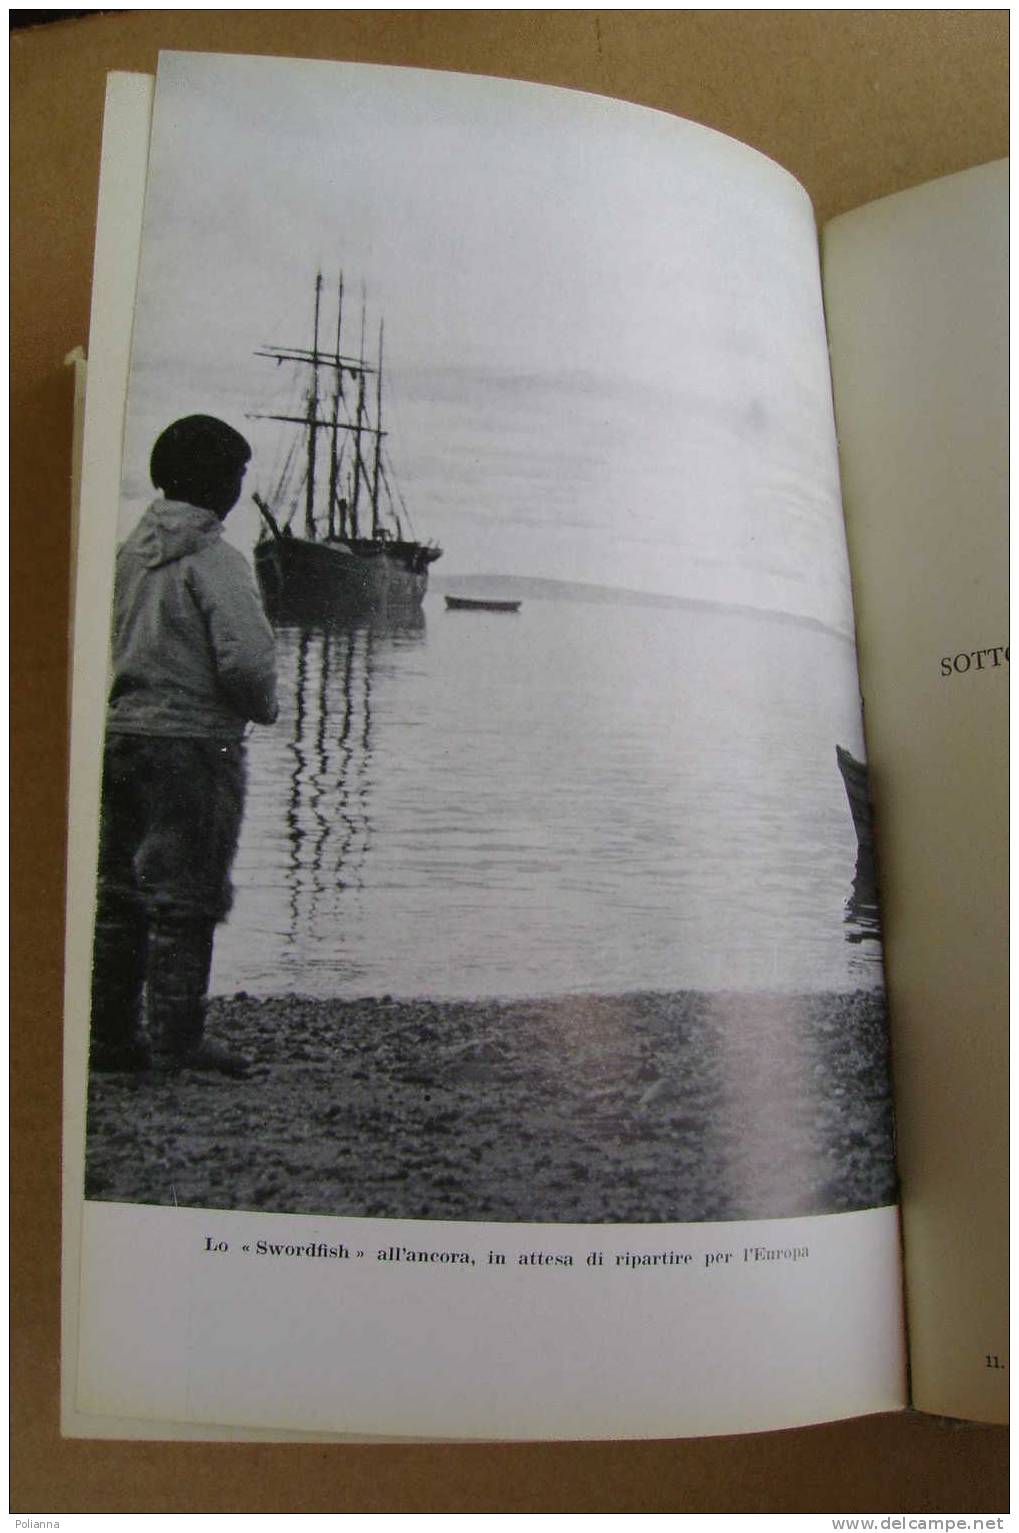 PDD/69 Aage Gilberg UN MEDICO TRA GLI ESCHIMESI Bompiani I^ Ed. 1951/nave "gustav Holm"/Thule/Capo Melville - Tourismus, Reisen